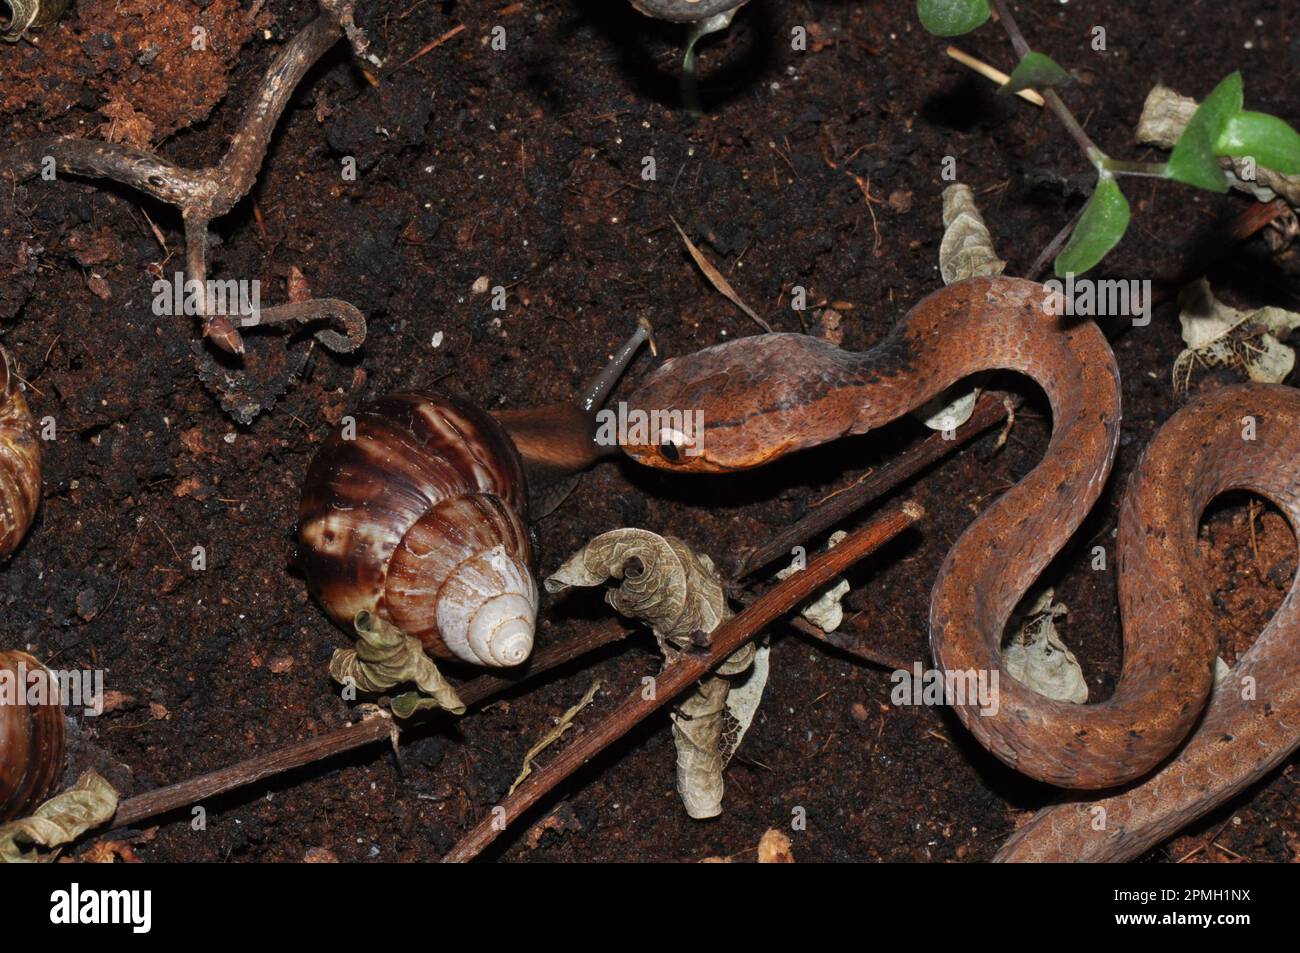 Pareas carinatus, Gekielte Schneckennatter, keeled snail eating snake Stock Photo